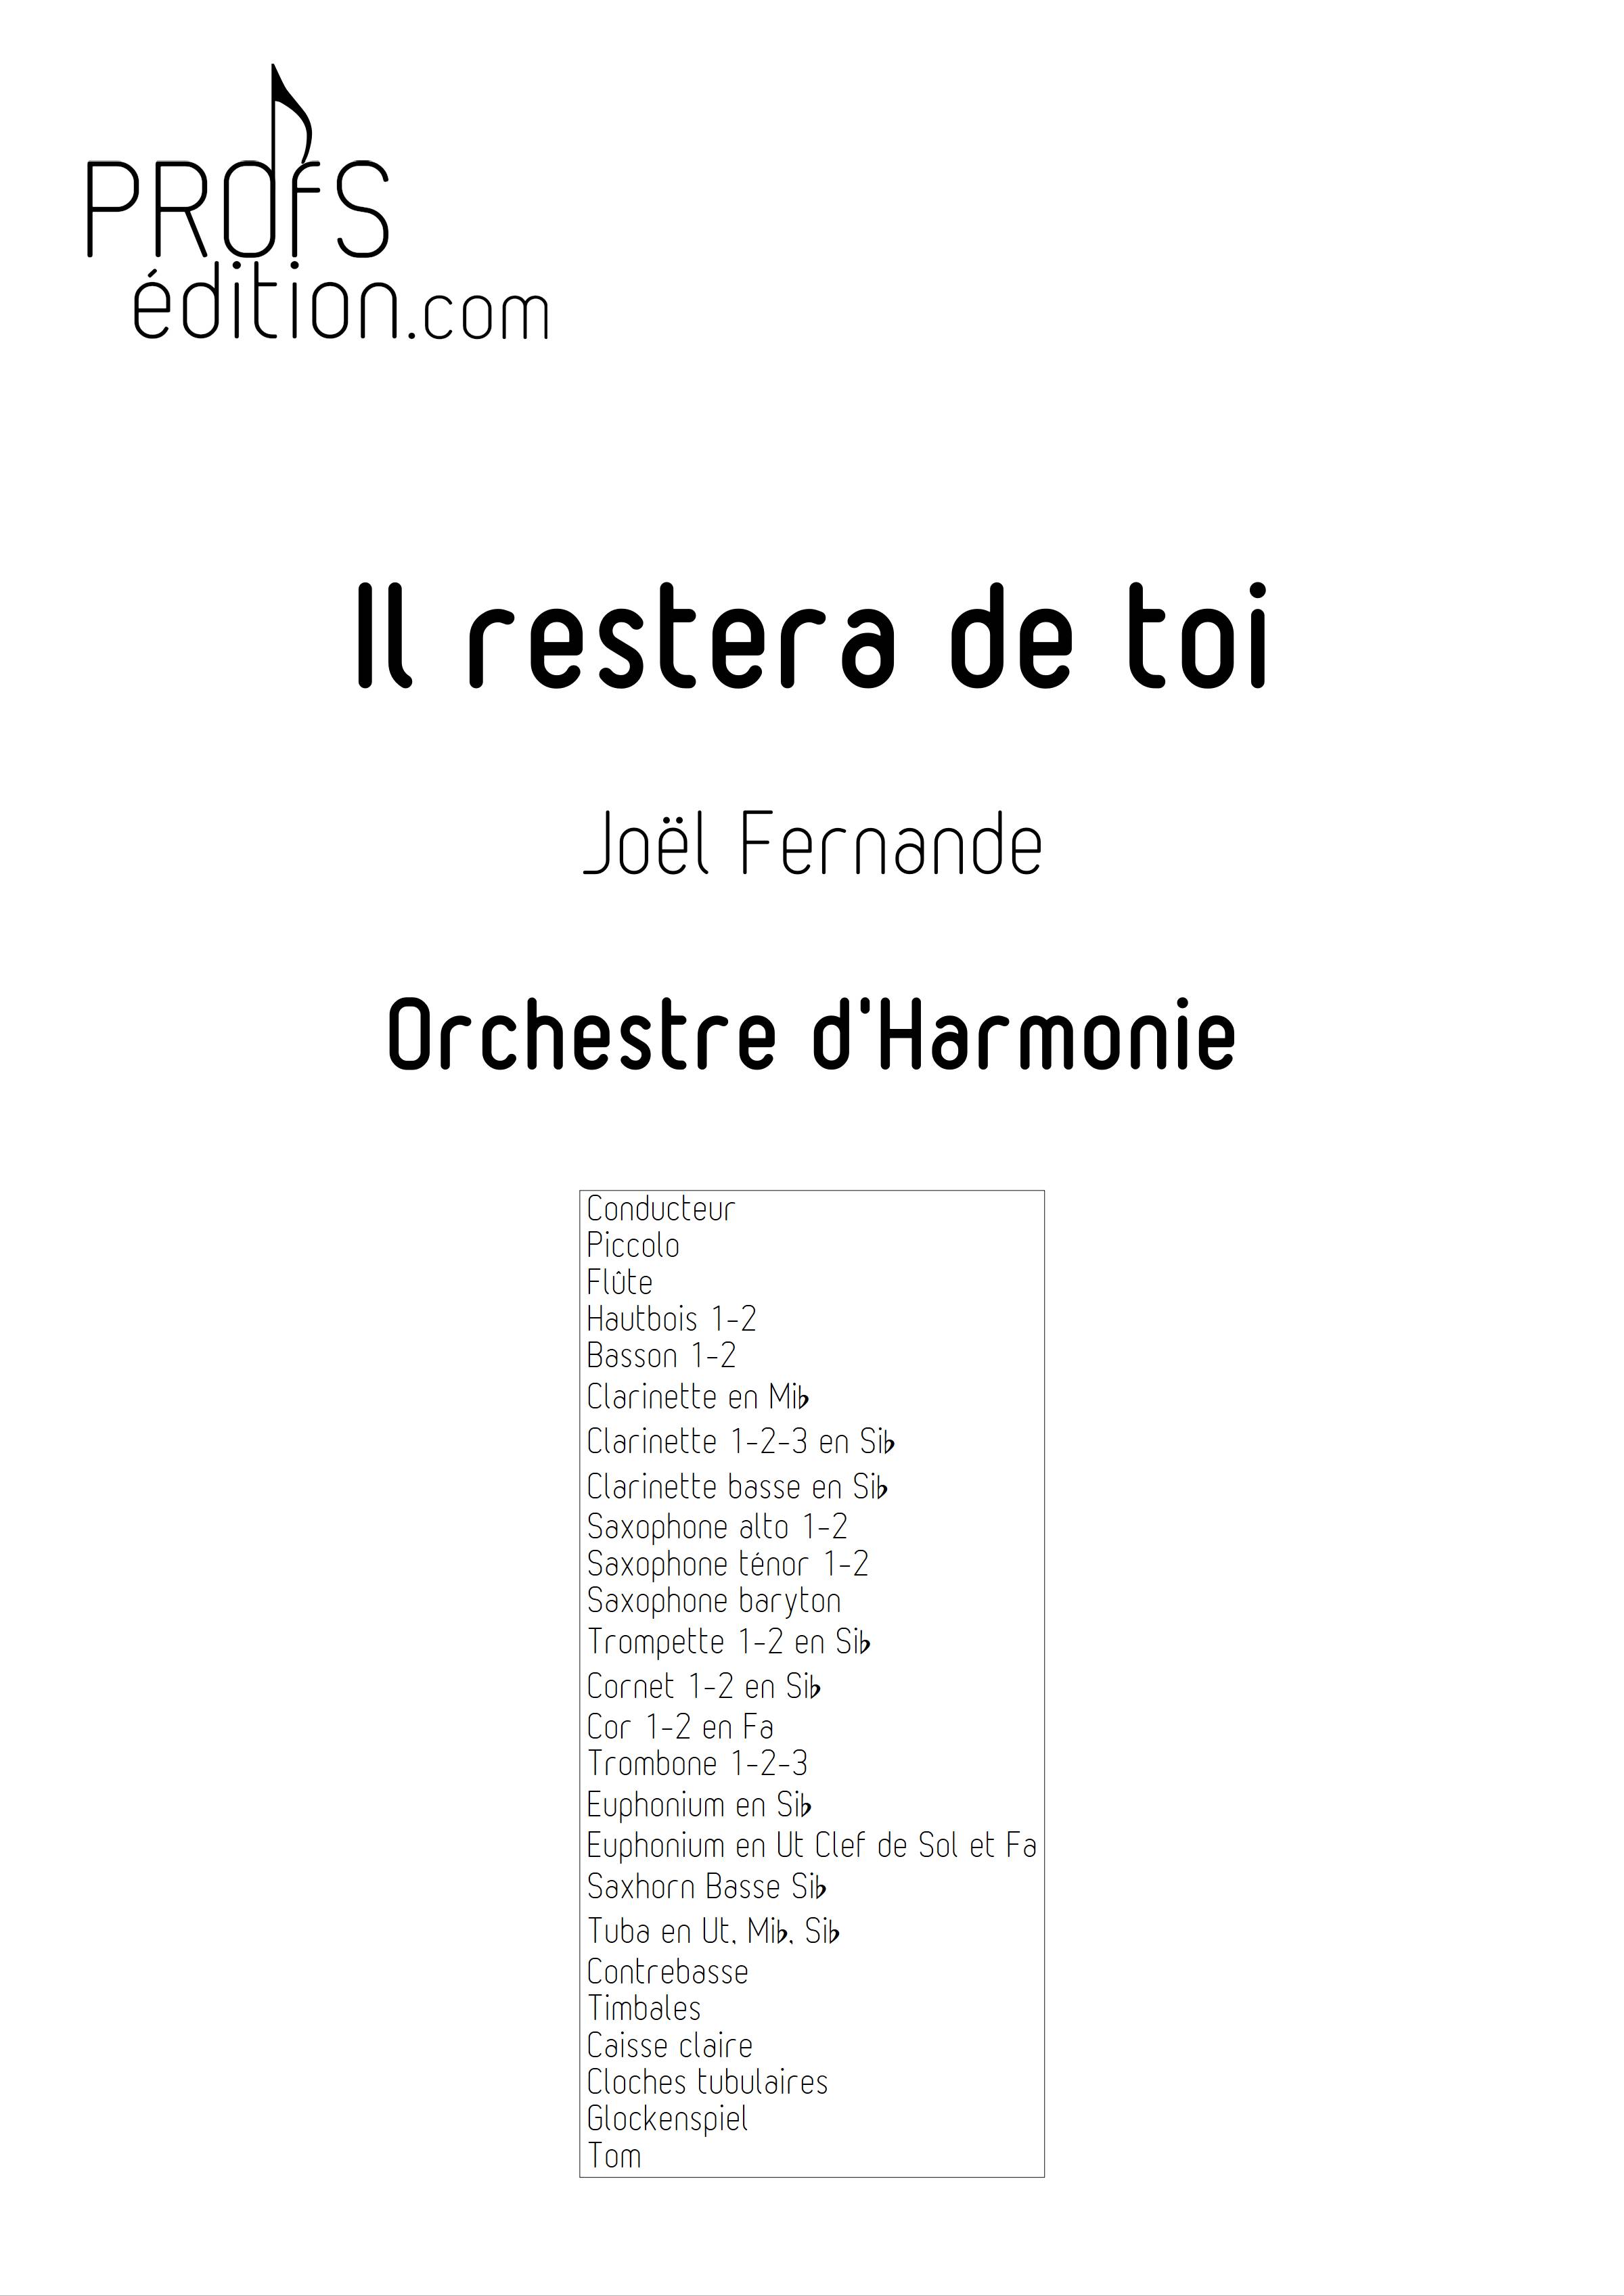 Il restera de toi - Orchestre d'harmonie - FERNANDE J. - page de garde